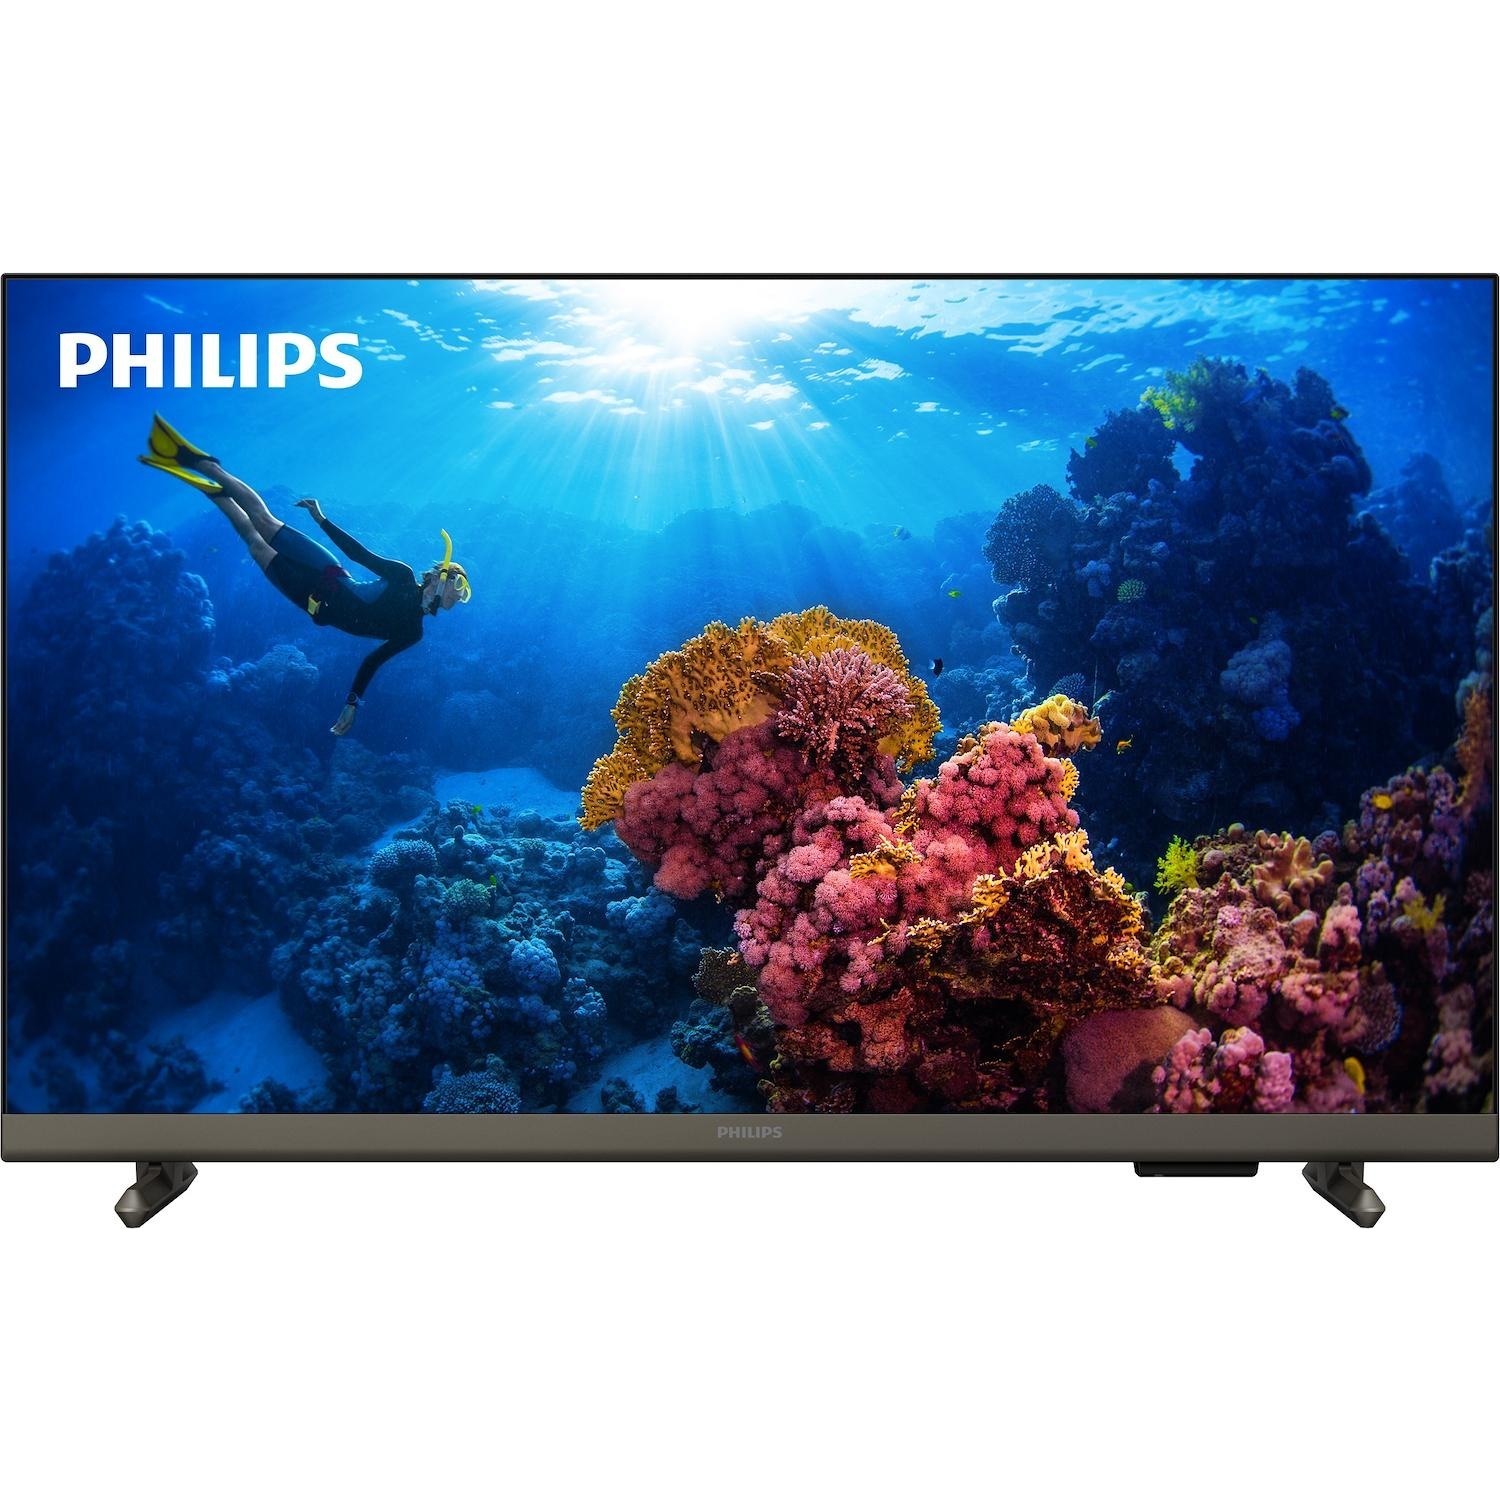 Immagine per TV LED Smart Philips 32PHS6808 da DIMOStore